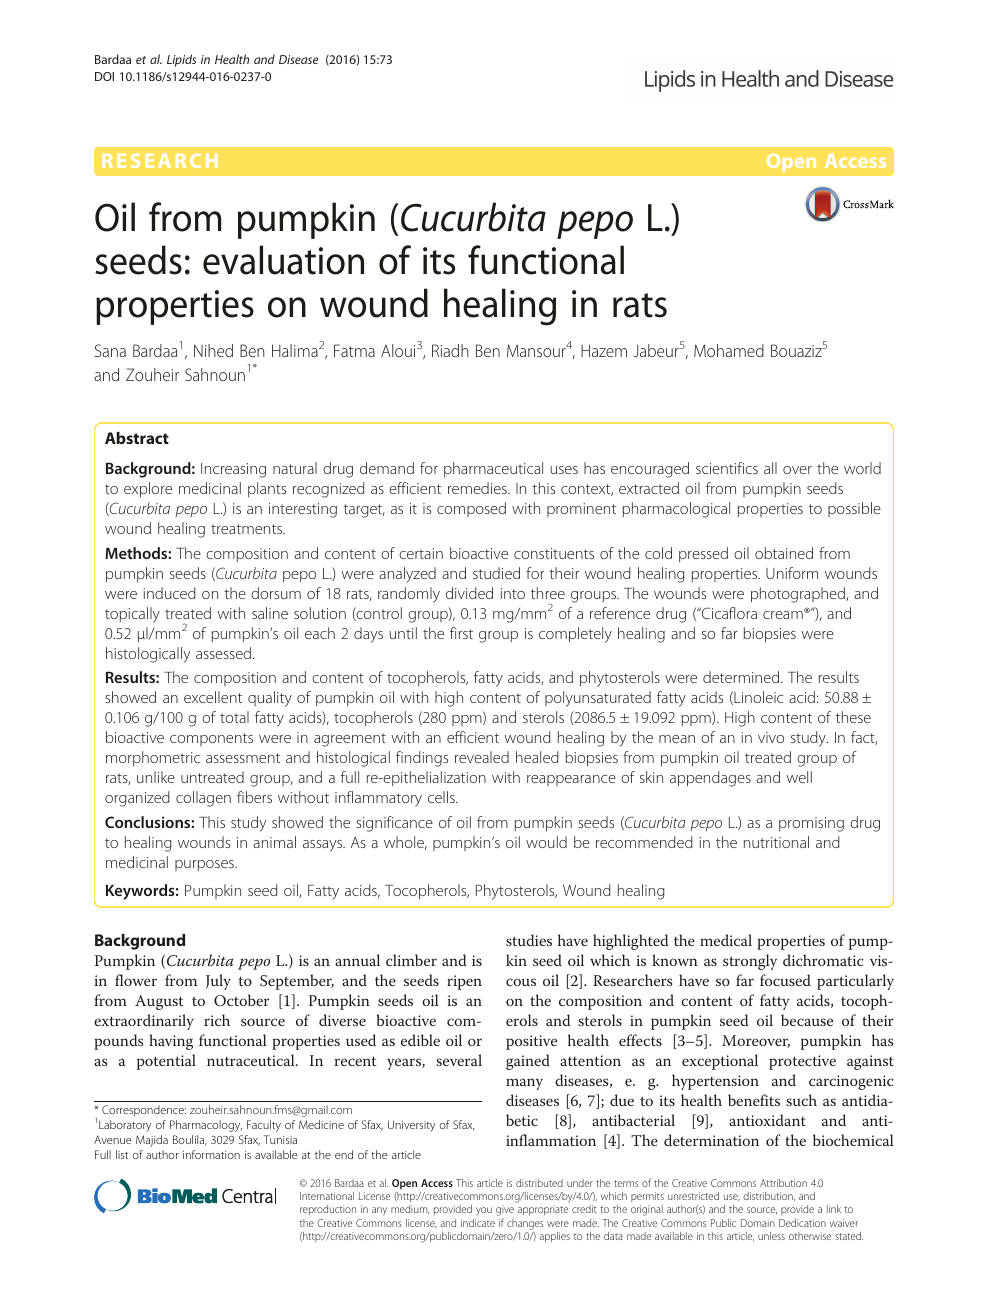 Oil From Pumpkin Cucurbita Pepo L Seeds Evaluation Of Its